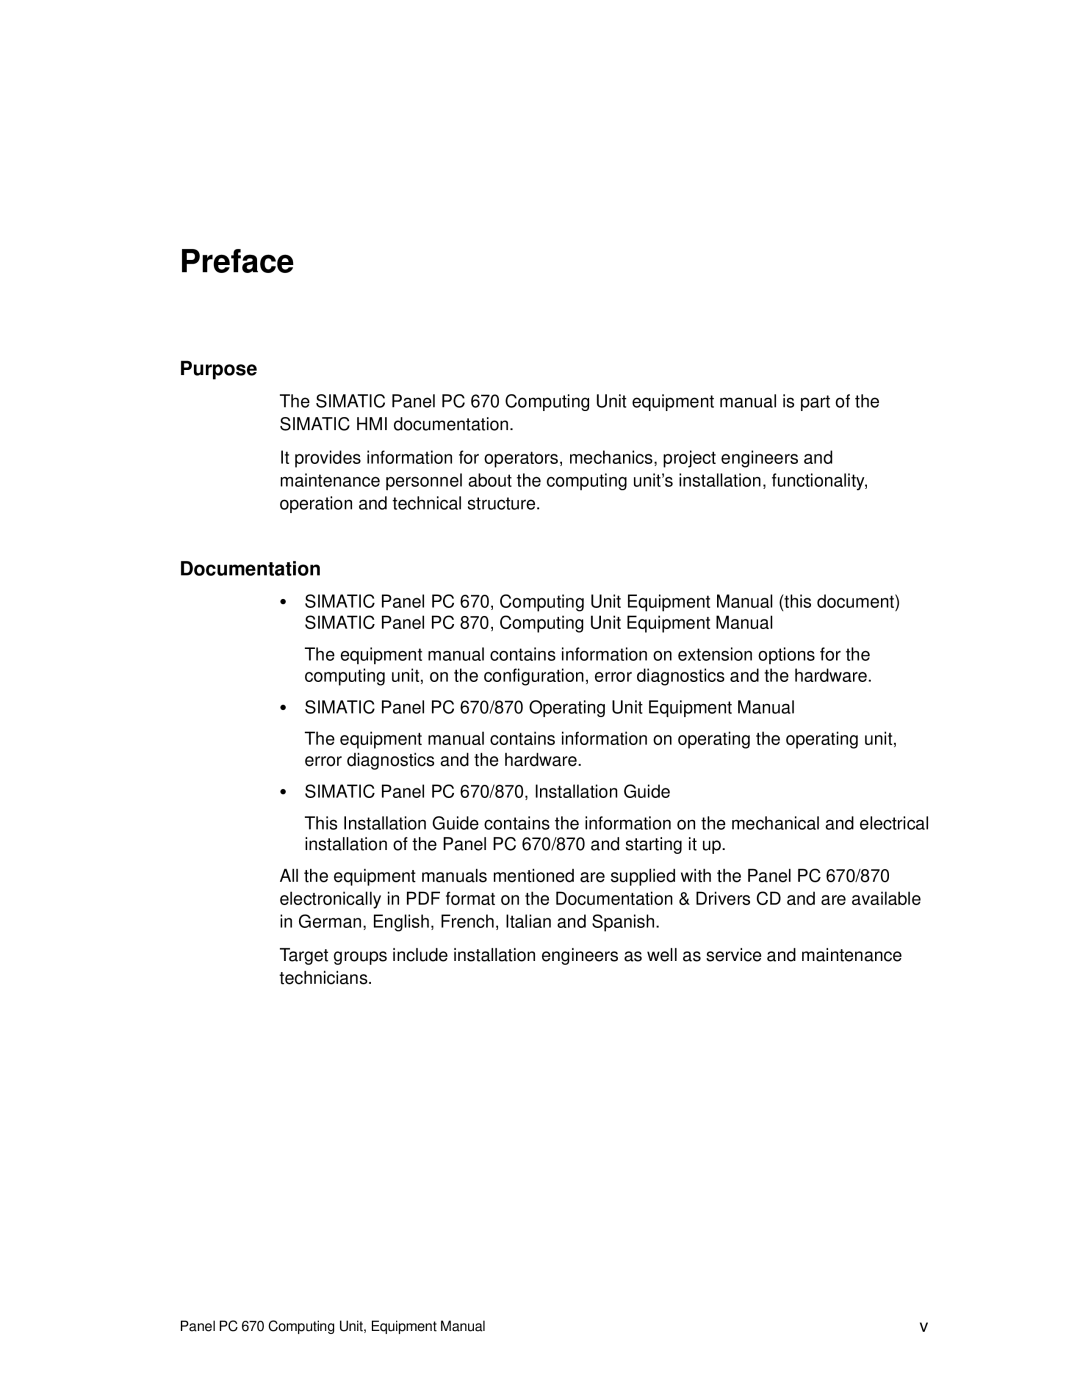 Siemens PC 670 manual Preface, Purpose, Documentation 